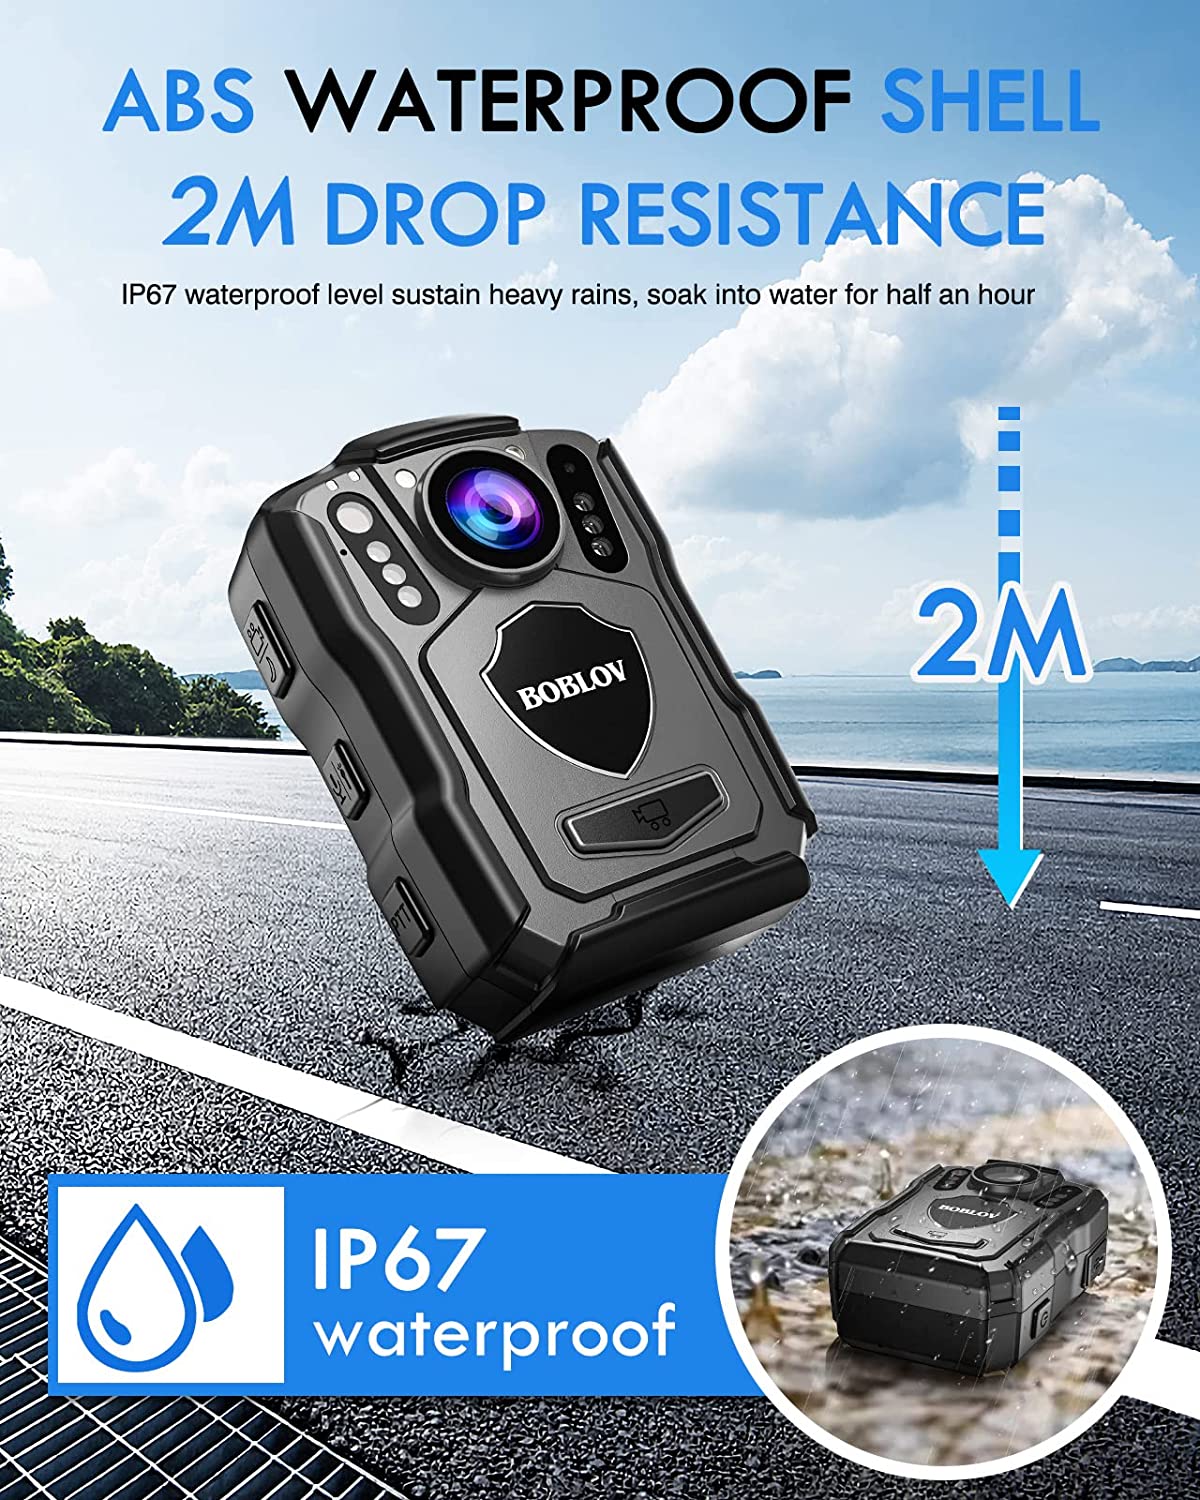 BOBLOV M5 1440P Body Camera 64GB Police Recorder 4200MAH Battery Bodycam Chest Camera IP67 Waterproof Mini Body Cam